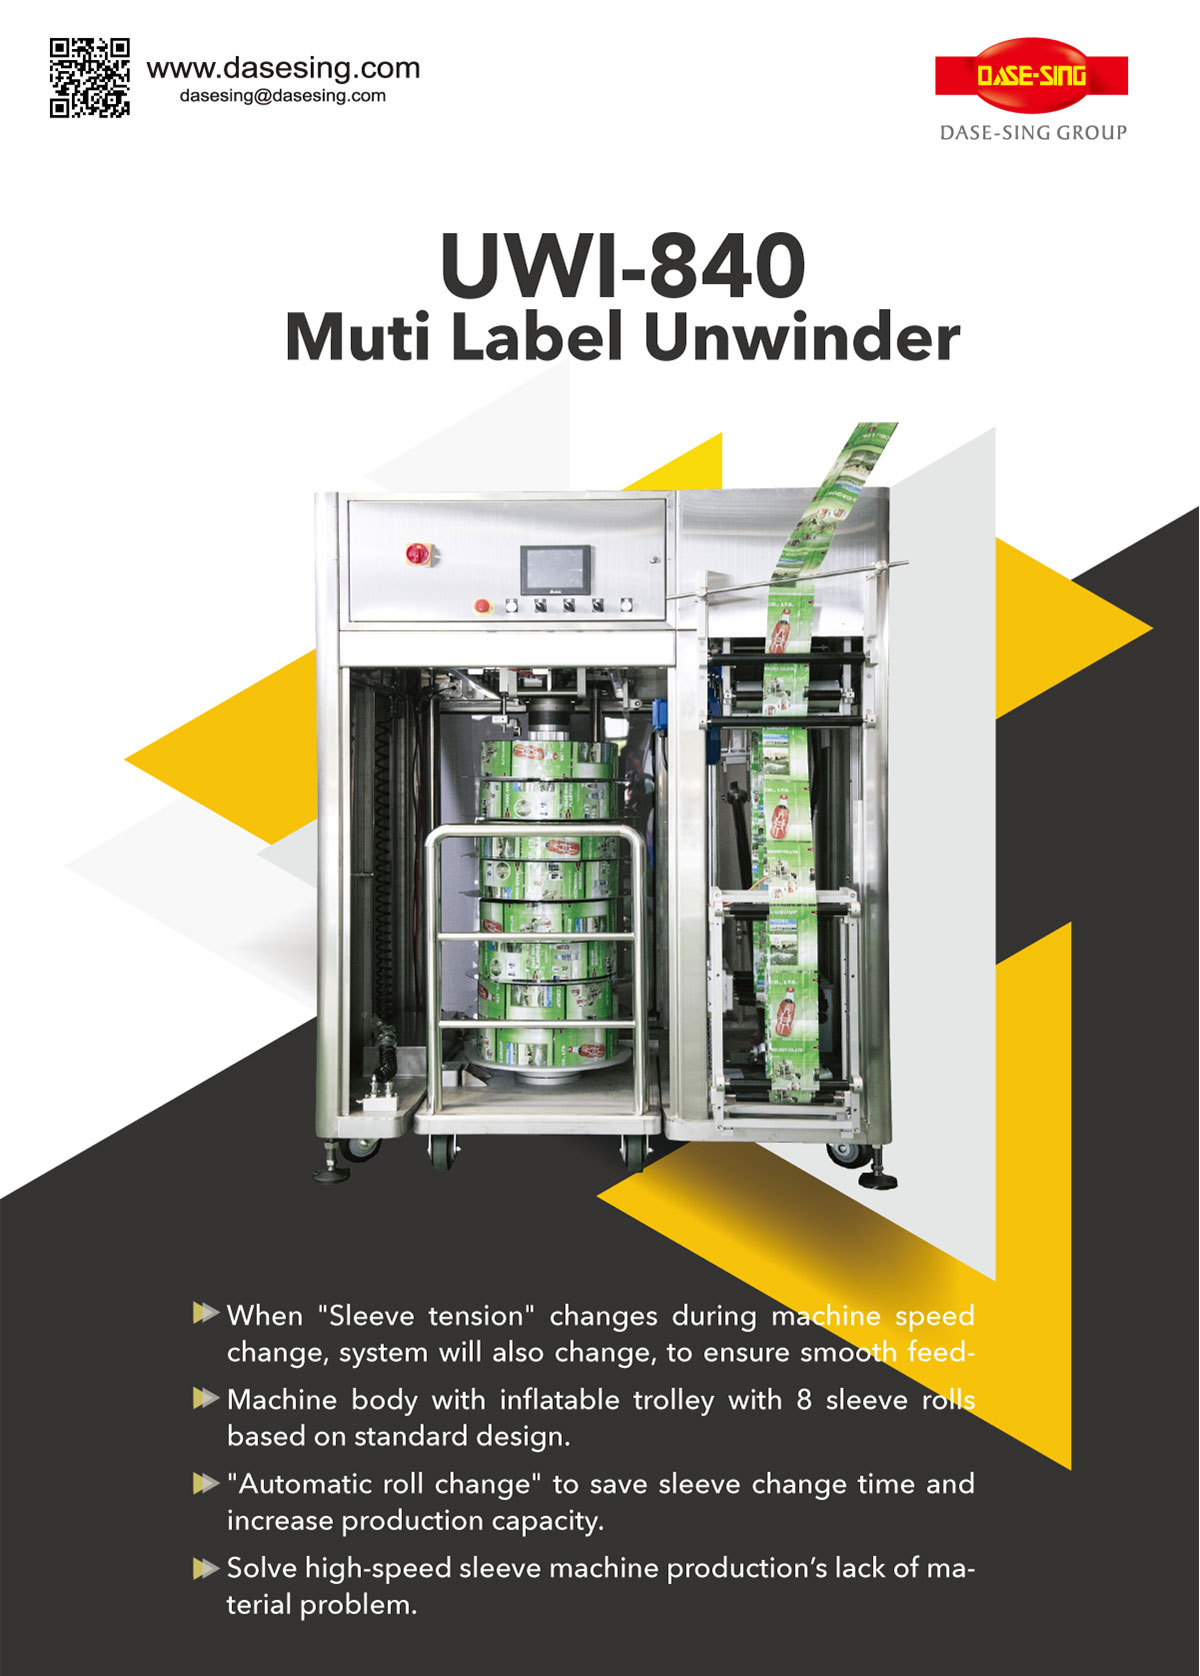 Muti Label Unwinder / UWI-840